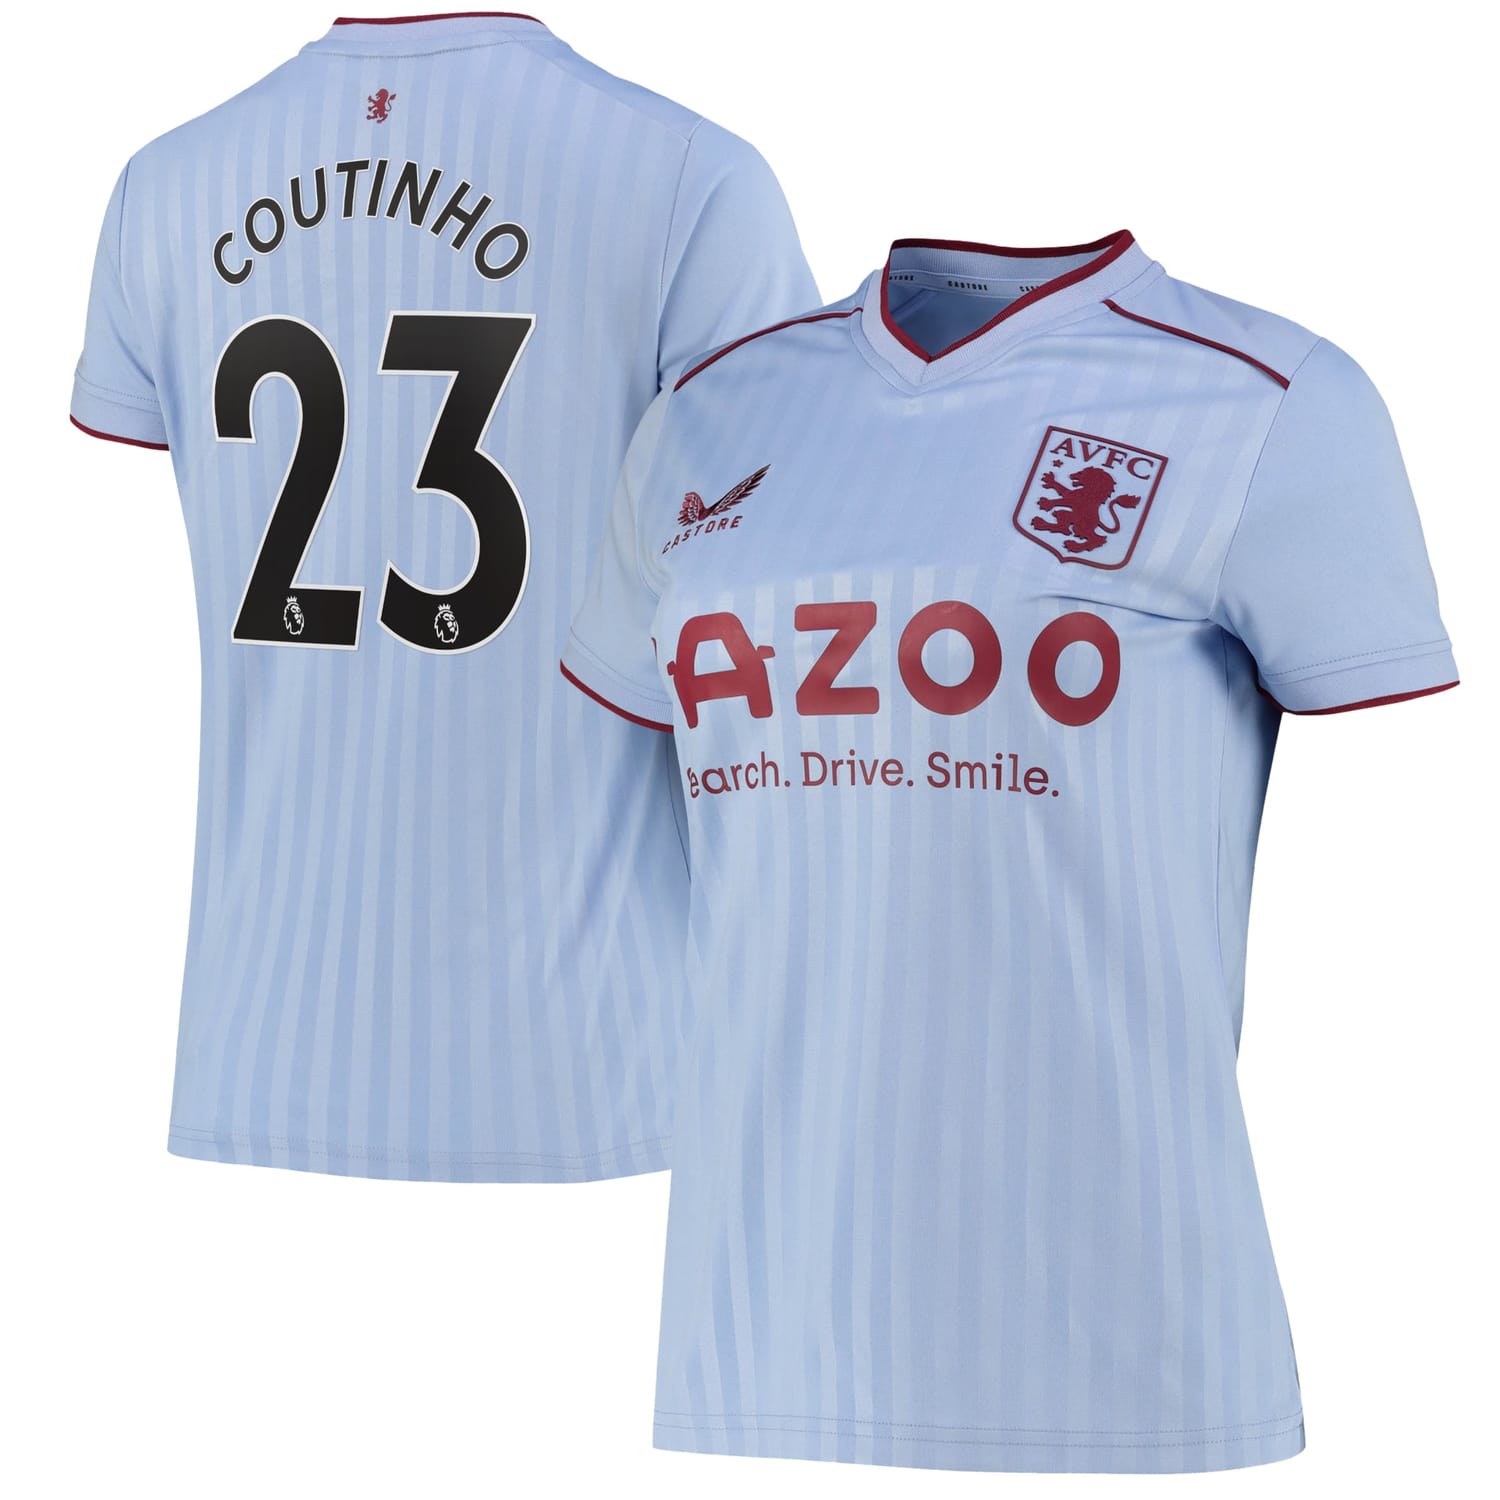 Premier League Aston Villa Away Jersey Shirt 2022-23 player Philippe Coutinho 23 printing for Women